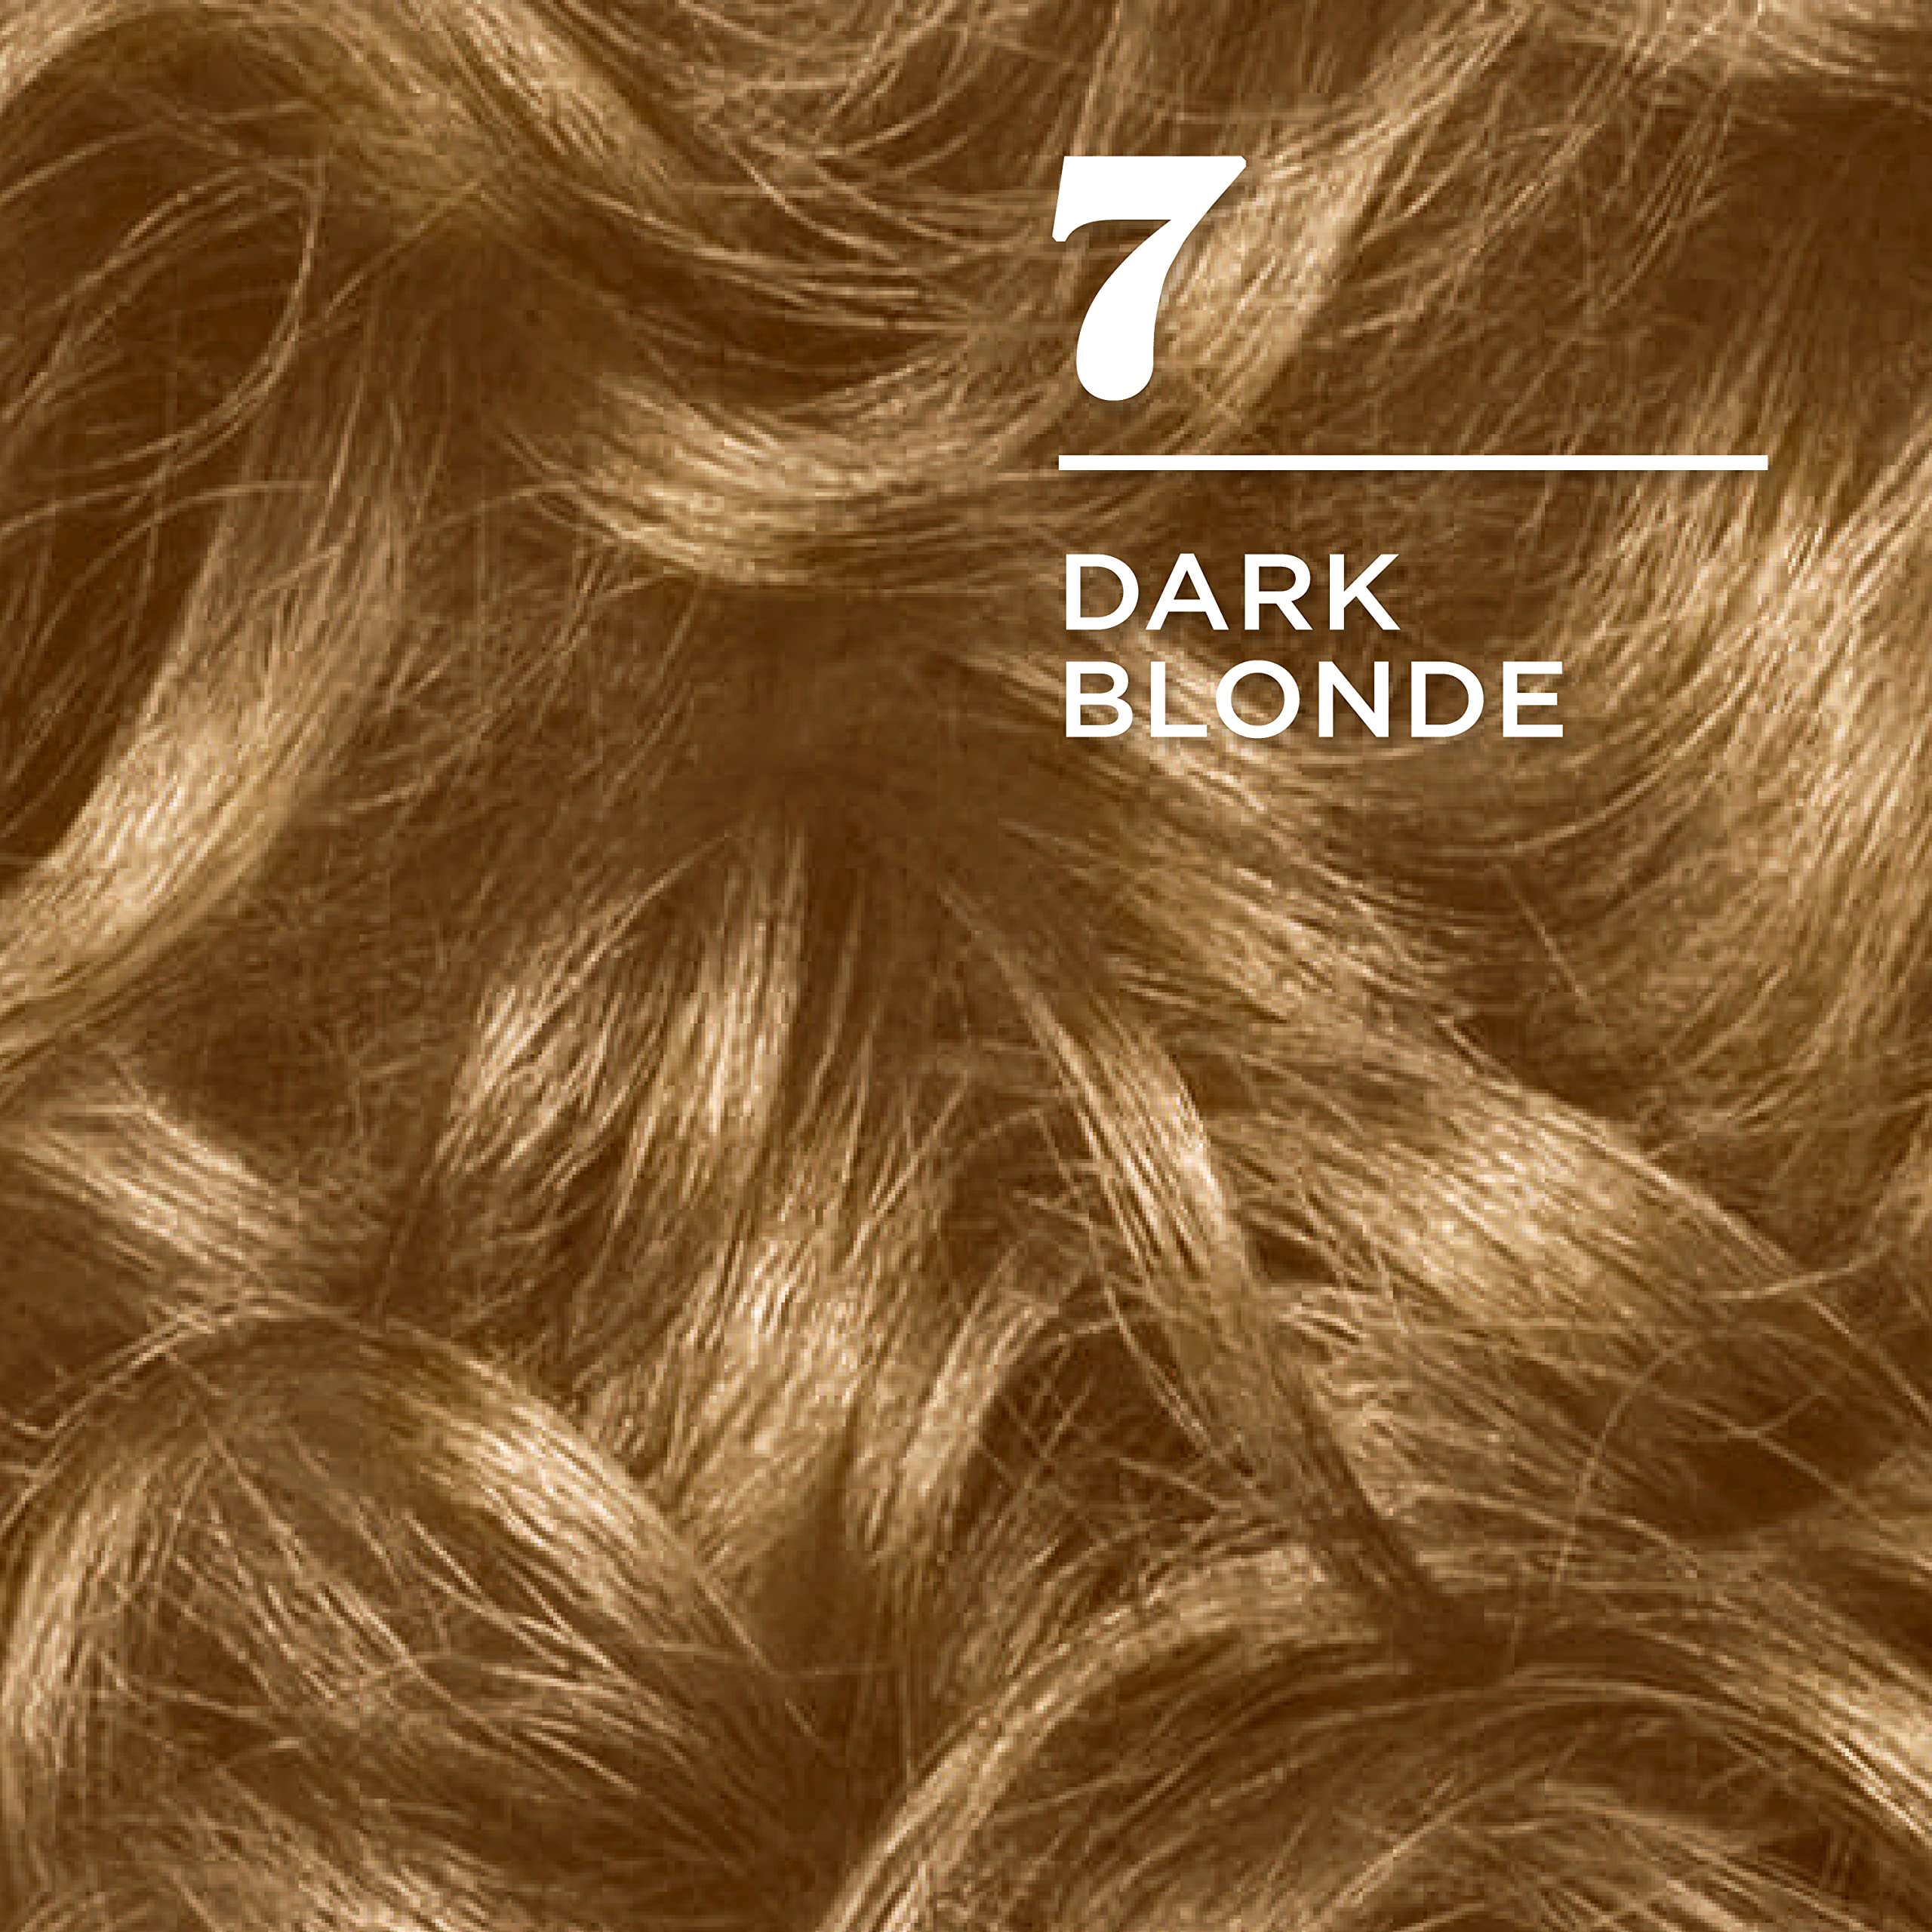 20 Beautiful Dark Blonde Hair Color Ideas for 2023